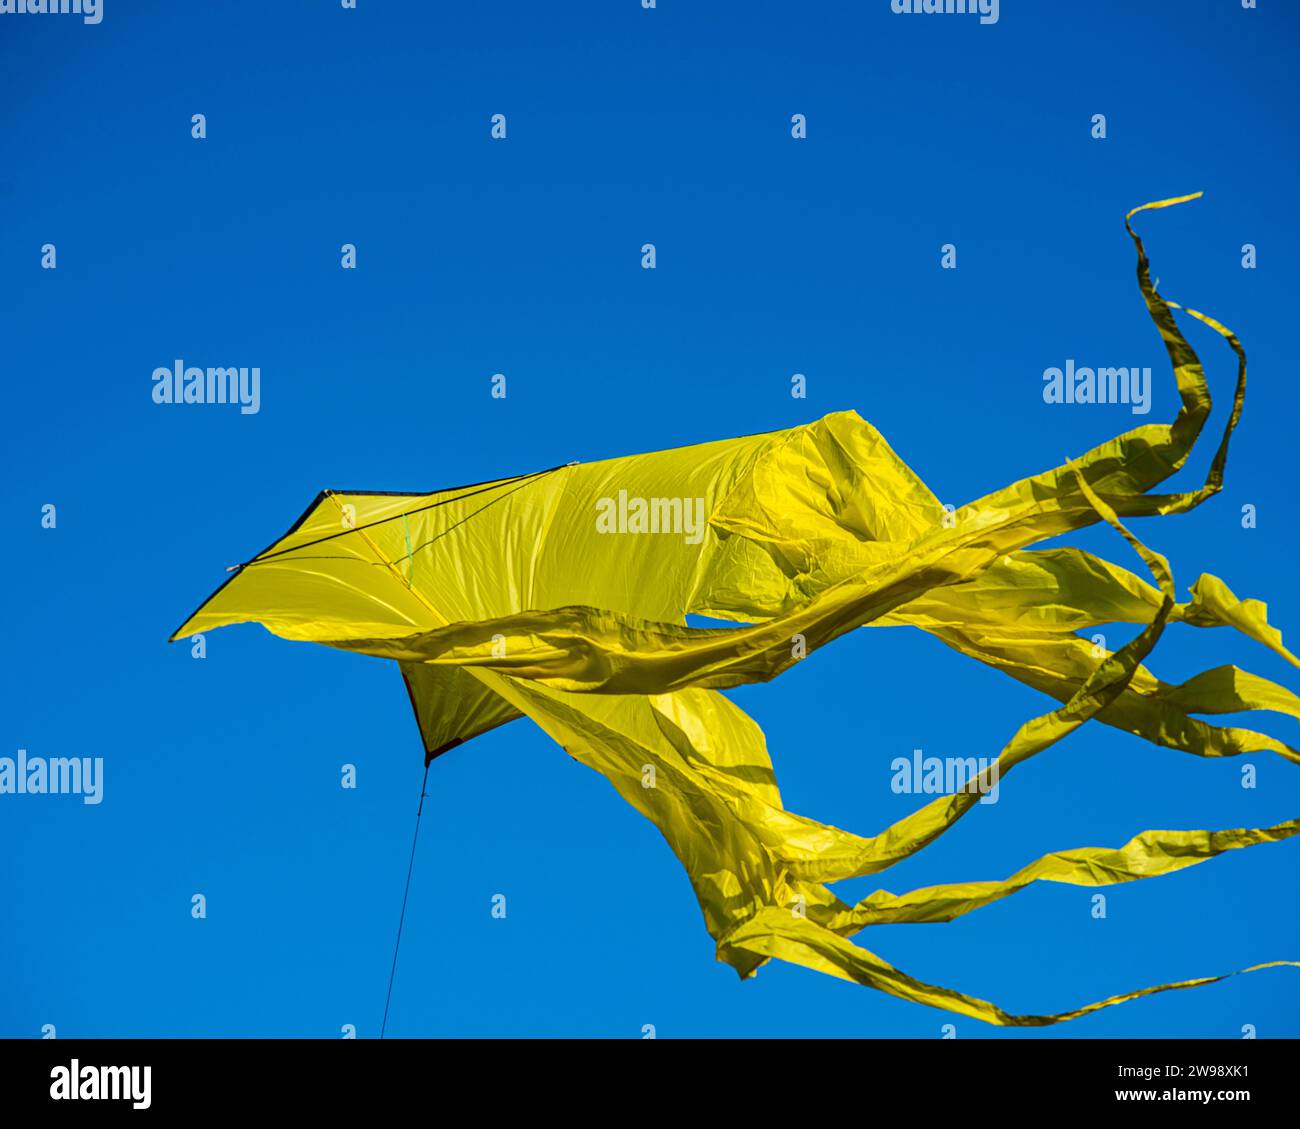 A vibrant yellow kite soaring through a bright blue sky. Stock Photo